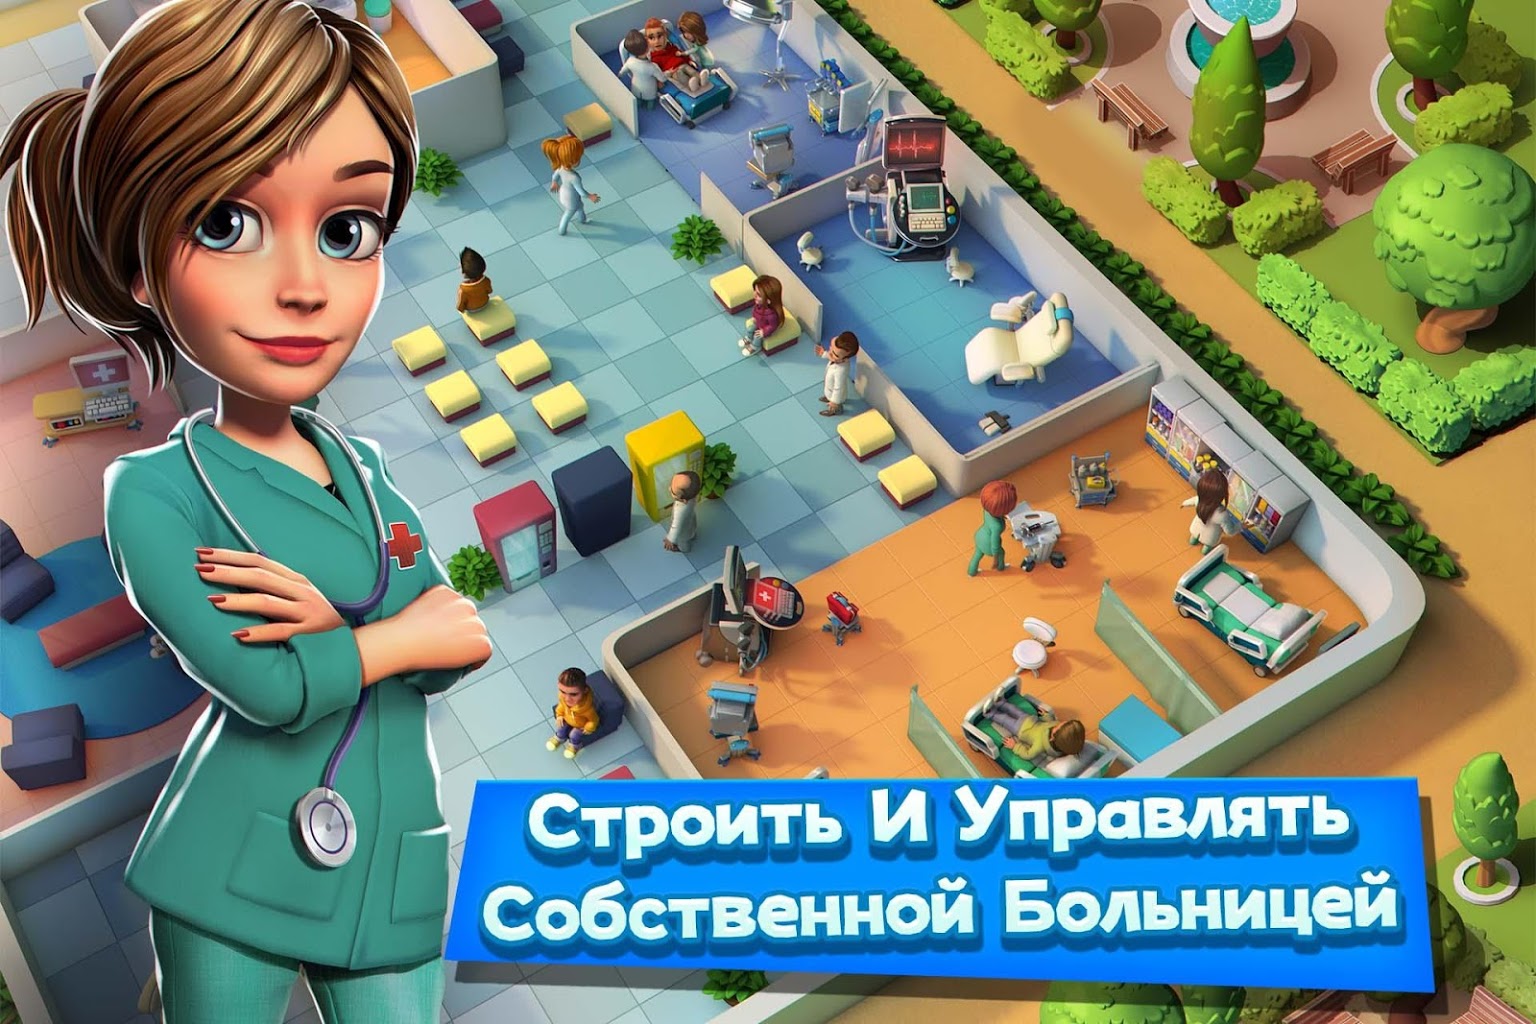 Игра нужна 12 12. Hospital 2 больница игра. Игра симулятор больницы. Дрим Хоспитал. Игра больничка.